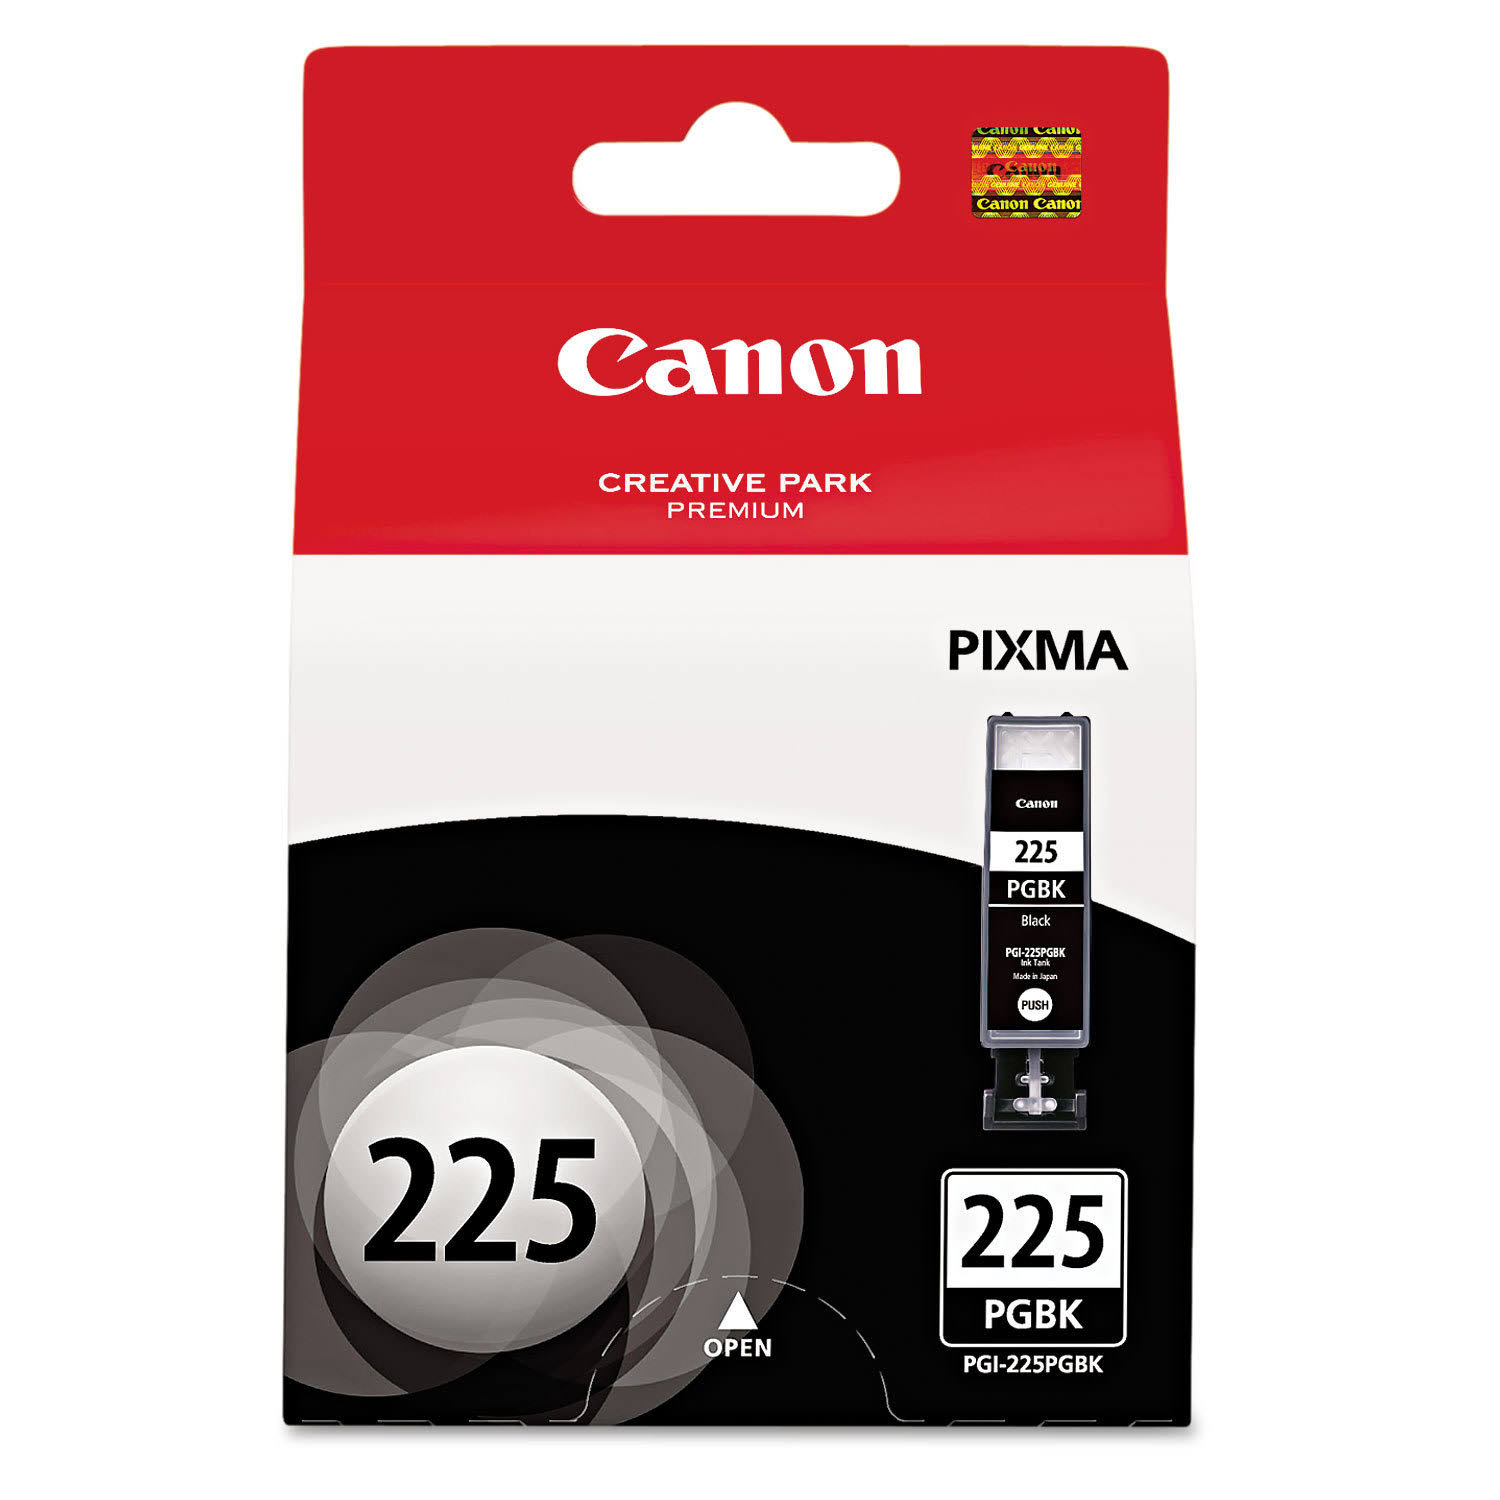 Canon Pixma Ink Tank - Black 225